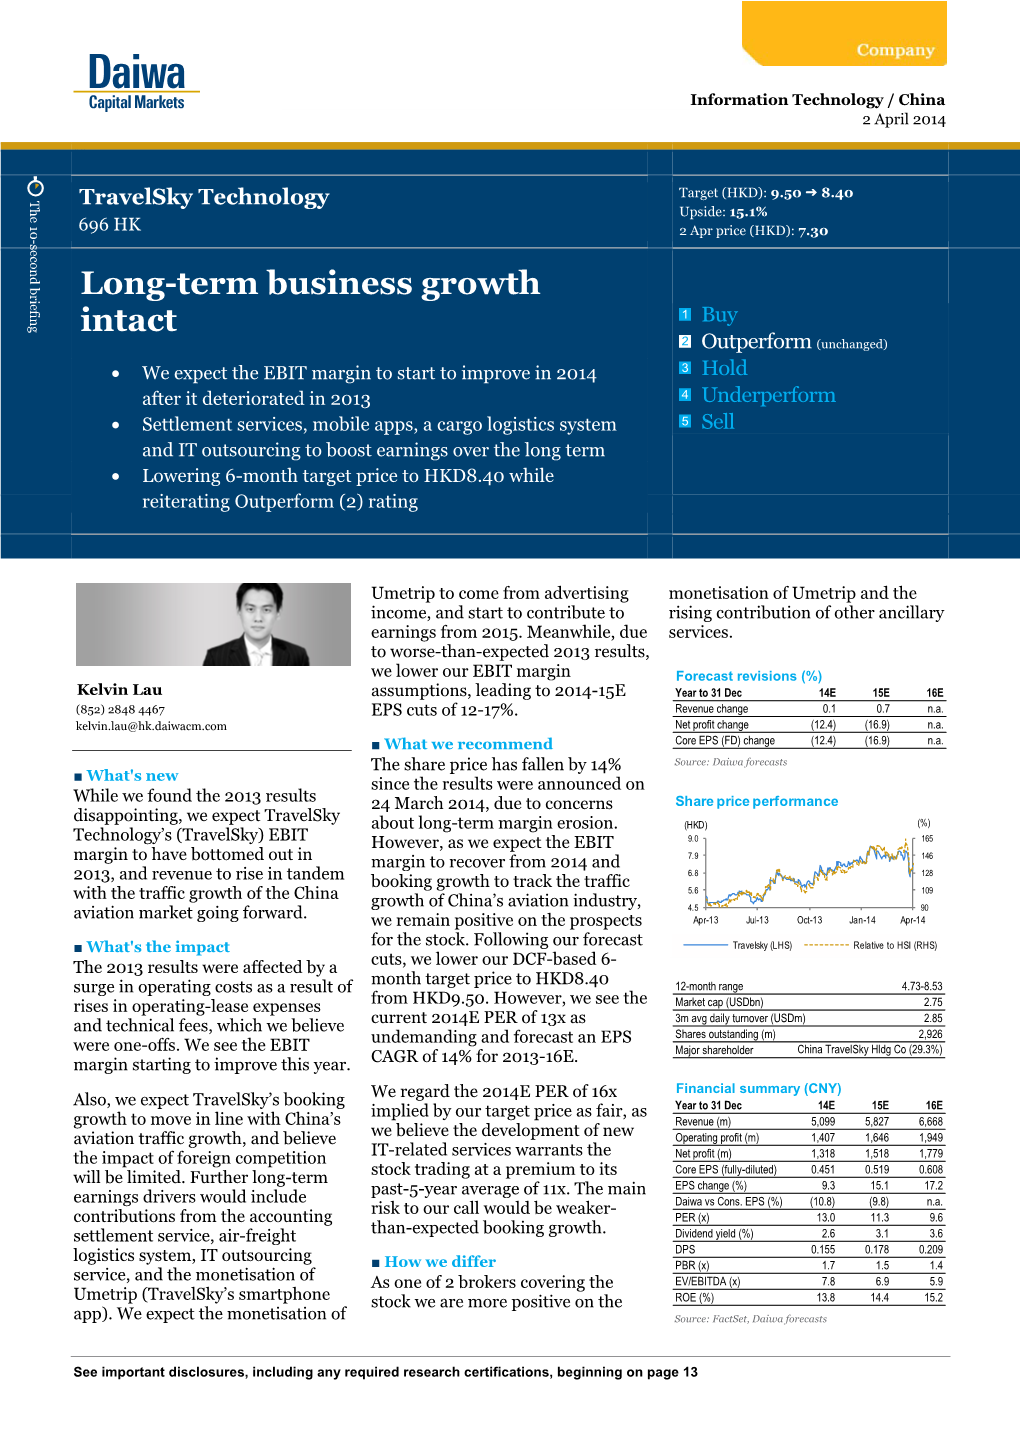 Long-Term Business Growth Intact